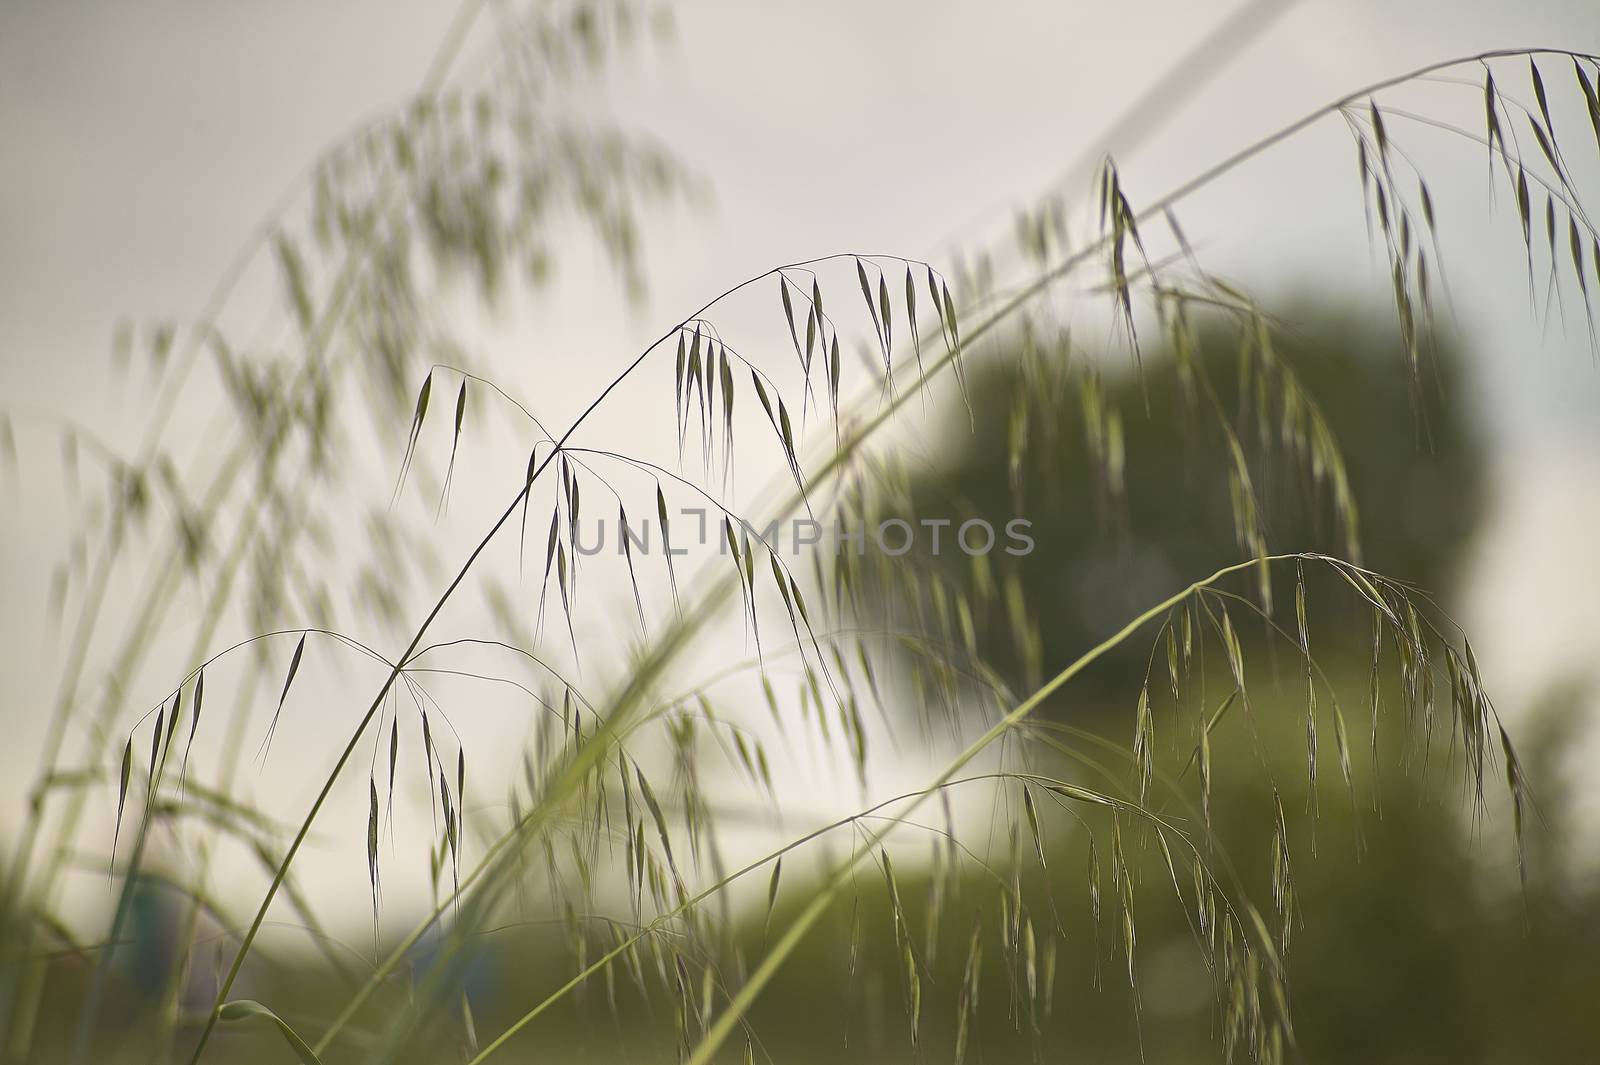 Windy yarns, a macro detail that evokes melancholy and reflection.